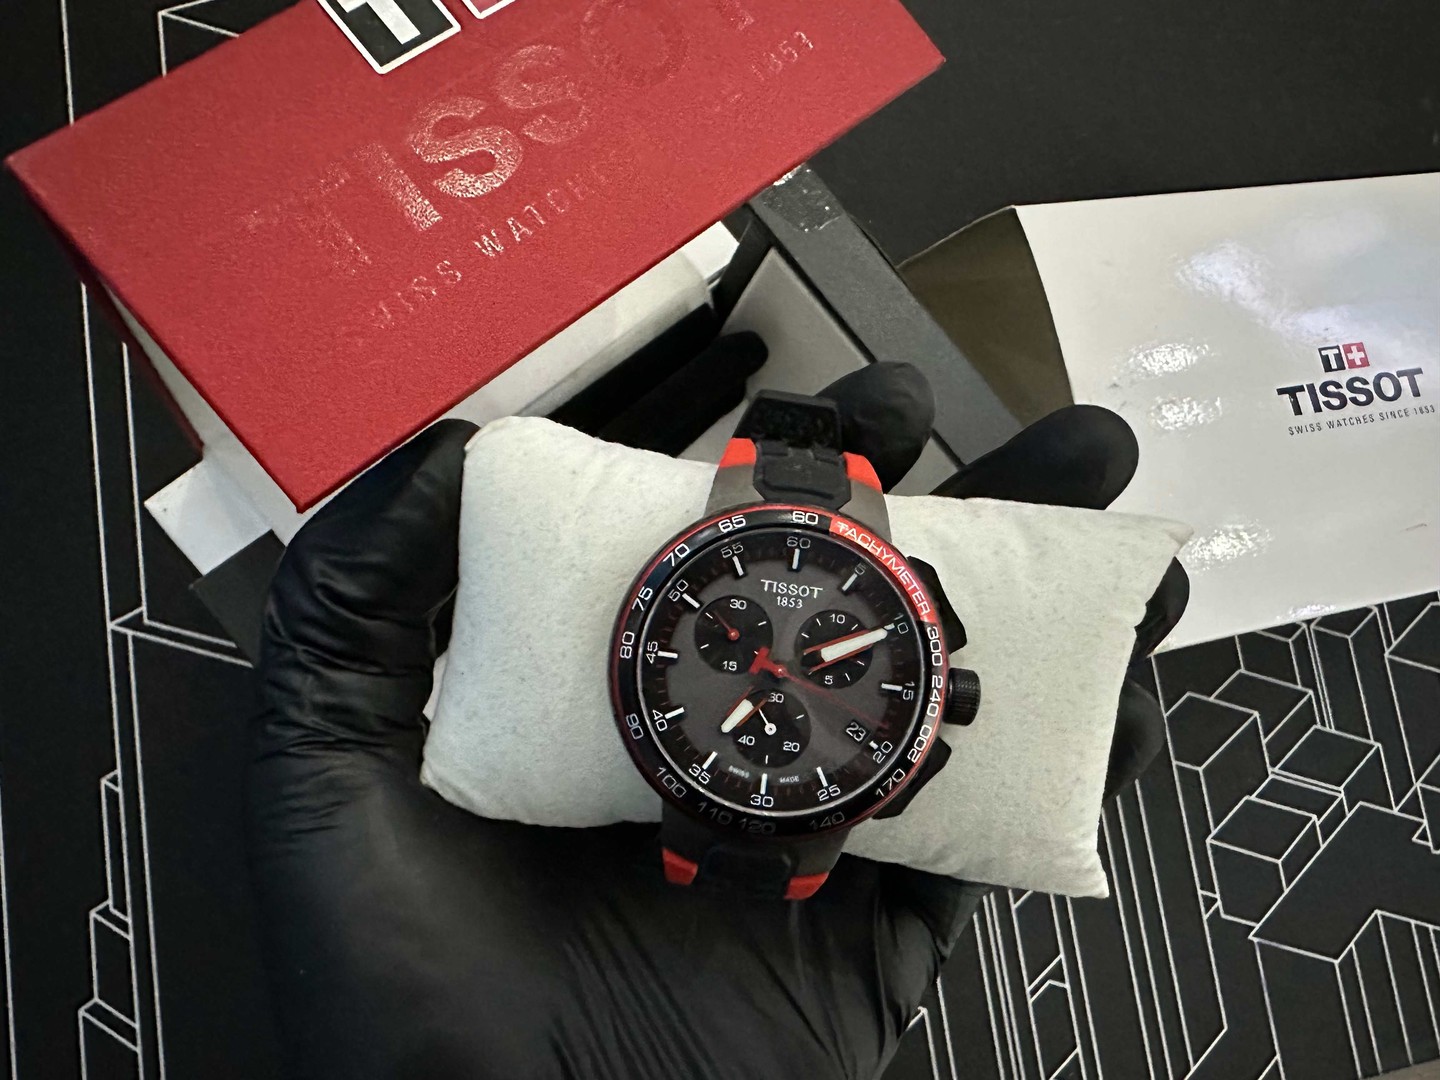 joyas, relojes y accesorios - Vendo Reloj Tissot T- Race Cycling Como Nuevo , Original RD$ 19,500 NEG 0